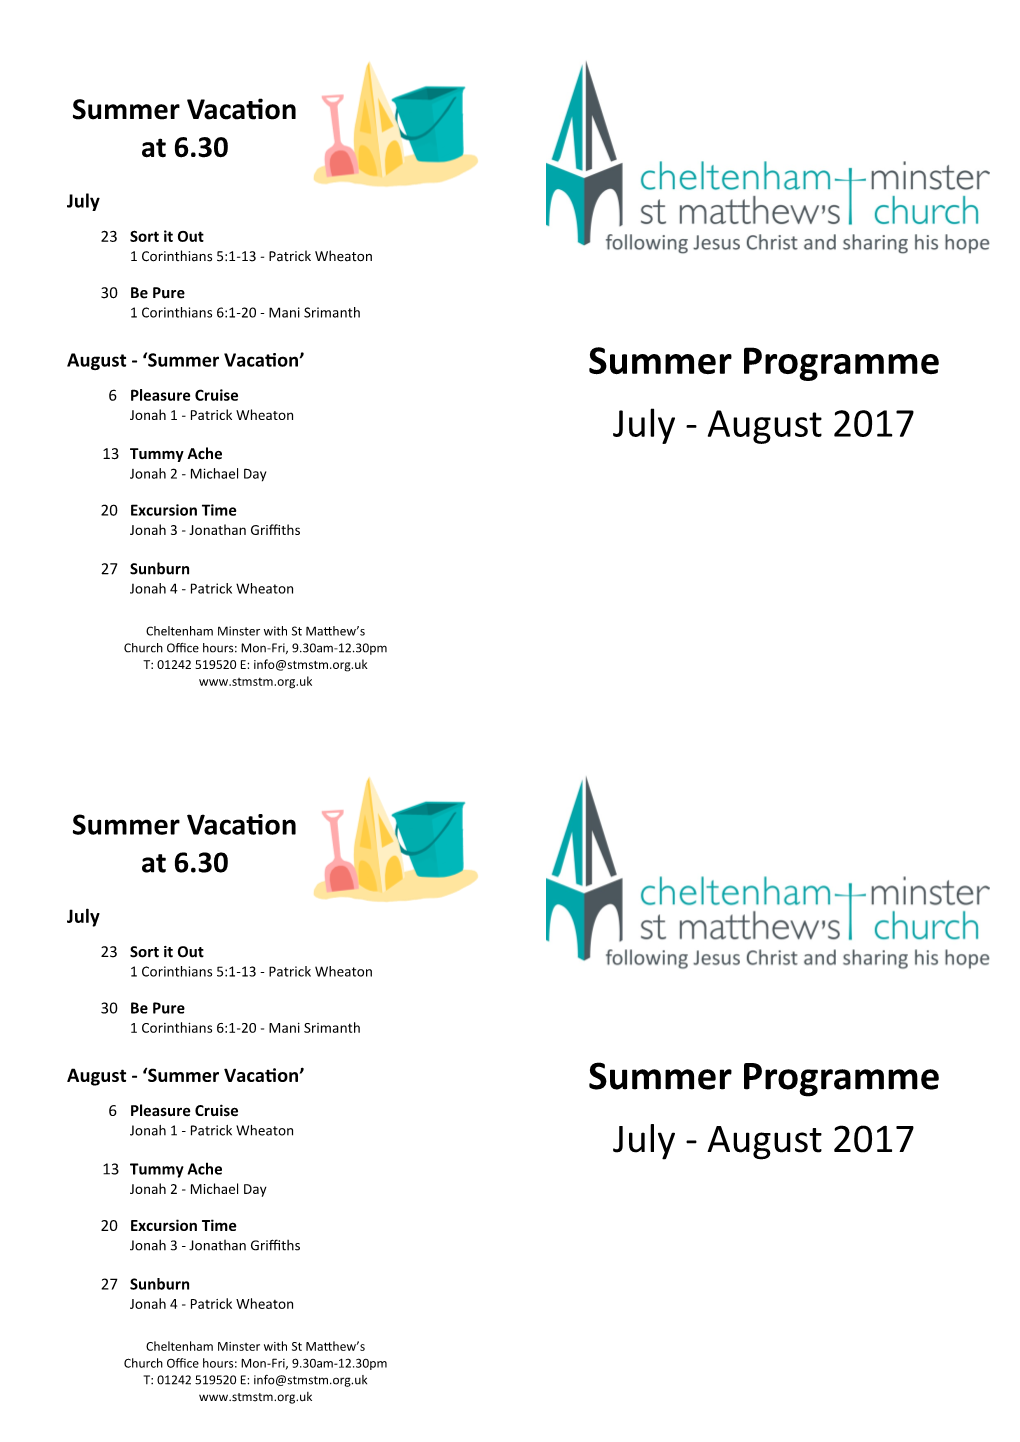 Summer Programme July